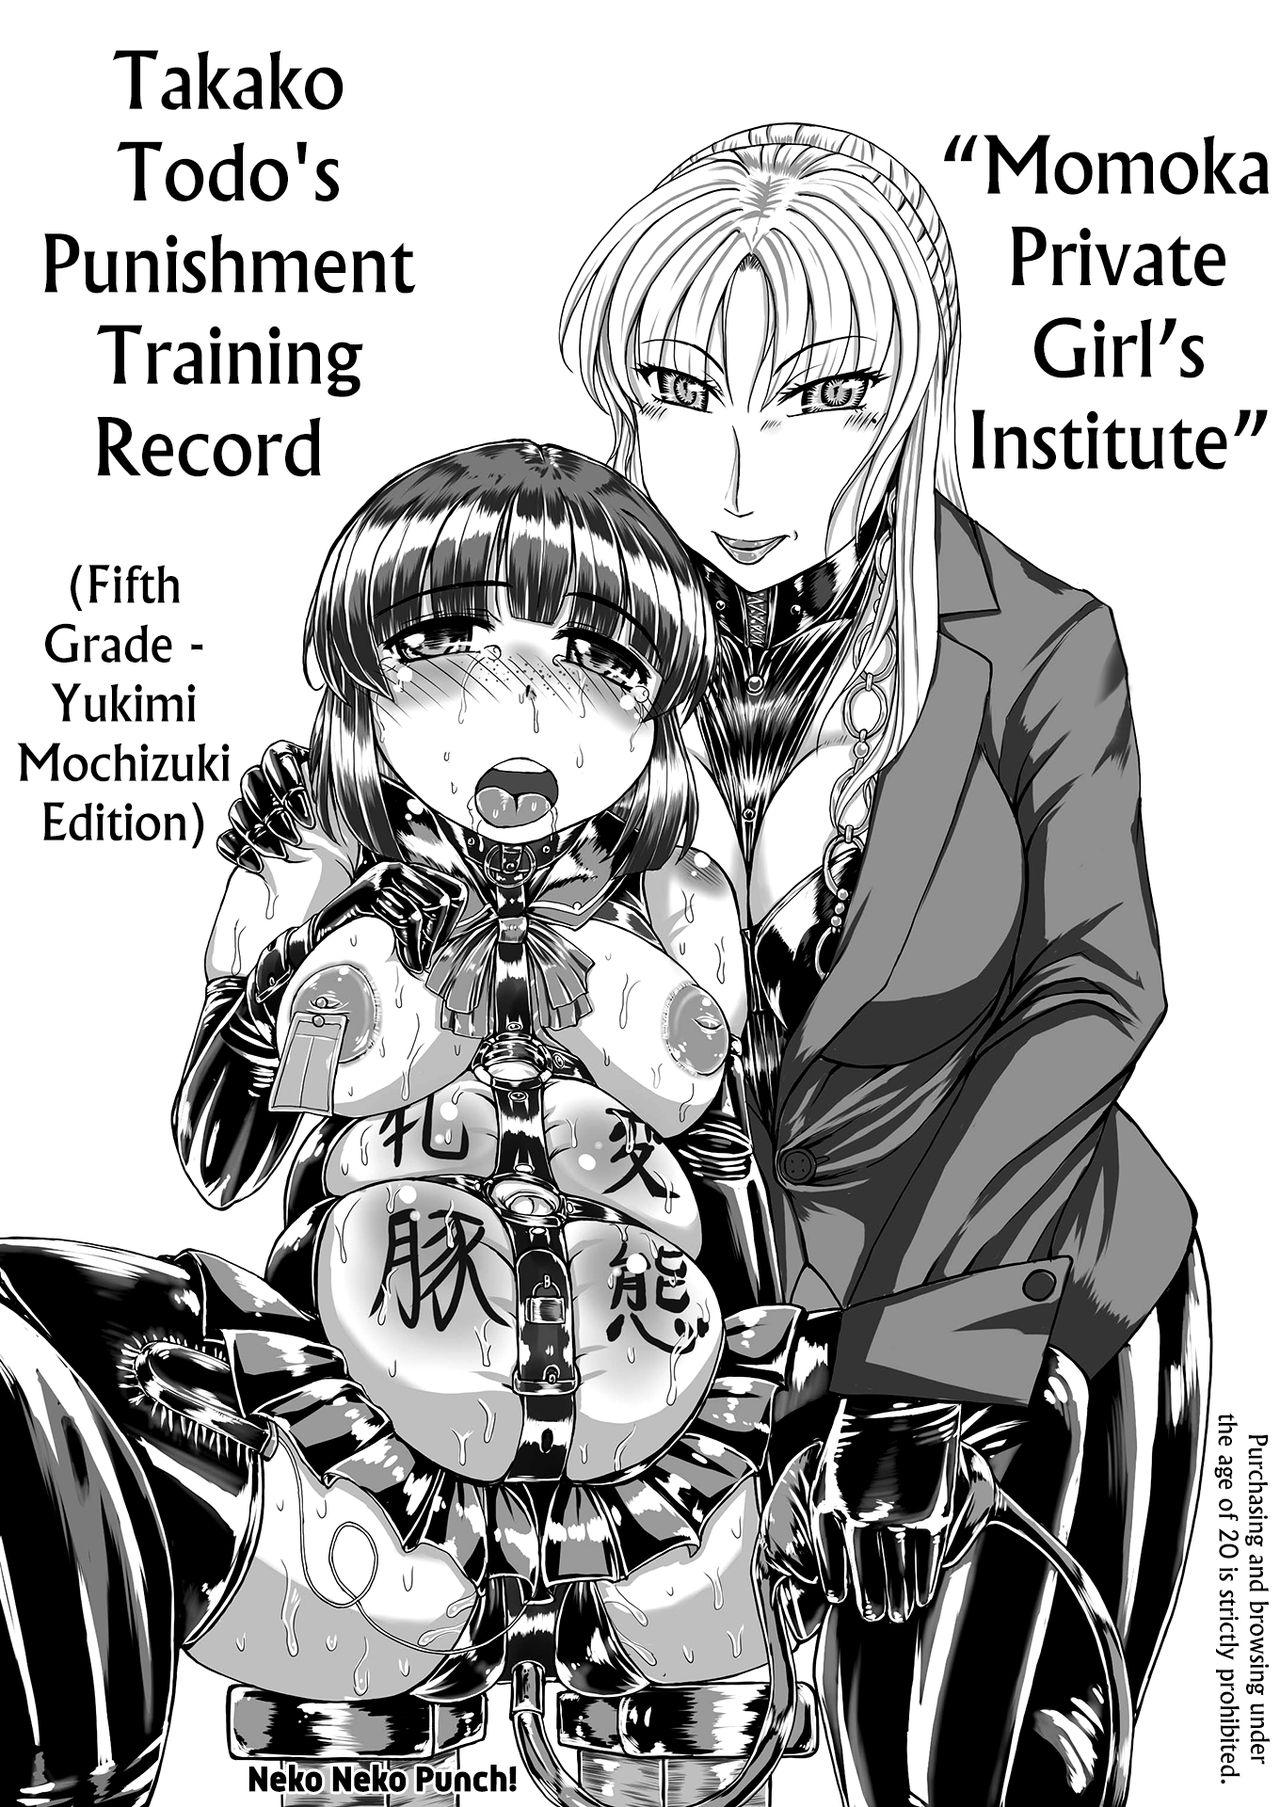 Anal Sex [Neko Neko Panchu!] [Momoka Private Girls Institute] [Takako Todo's Punishment Training Record] (Fifth Grade - Yukimi Mochizuki Edition) [English] Fucking Sex - Picture 1